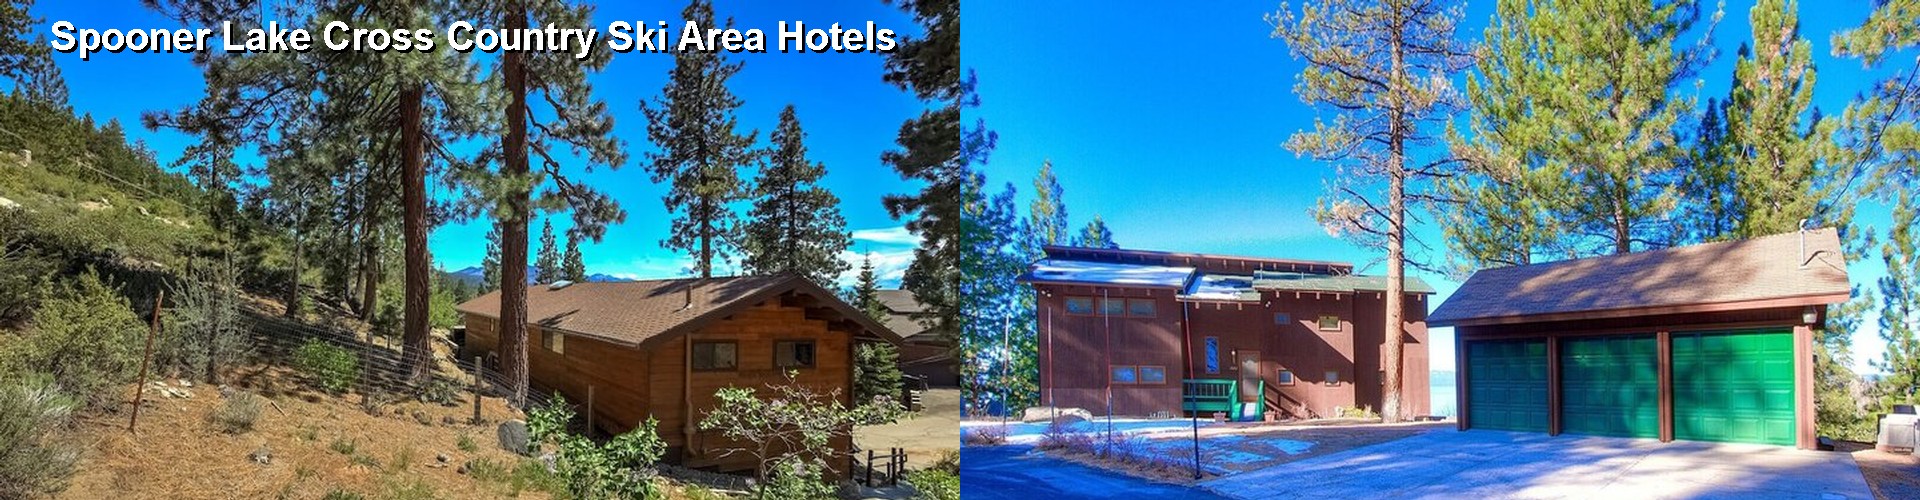 5 Best Hotels near Spooner Lake Cross Country Ski Area